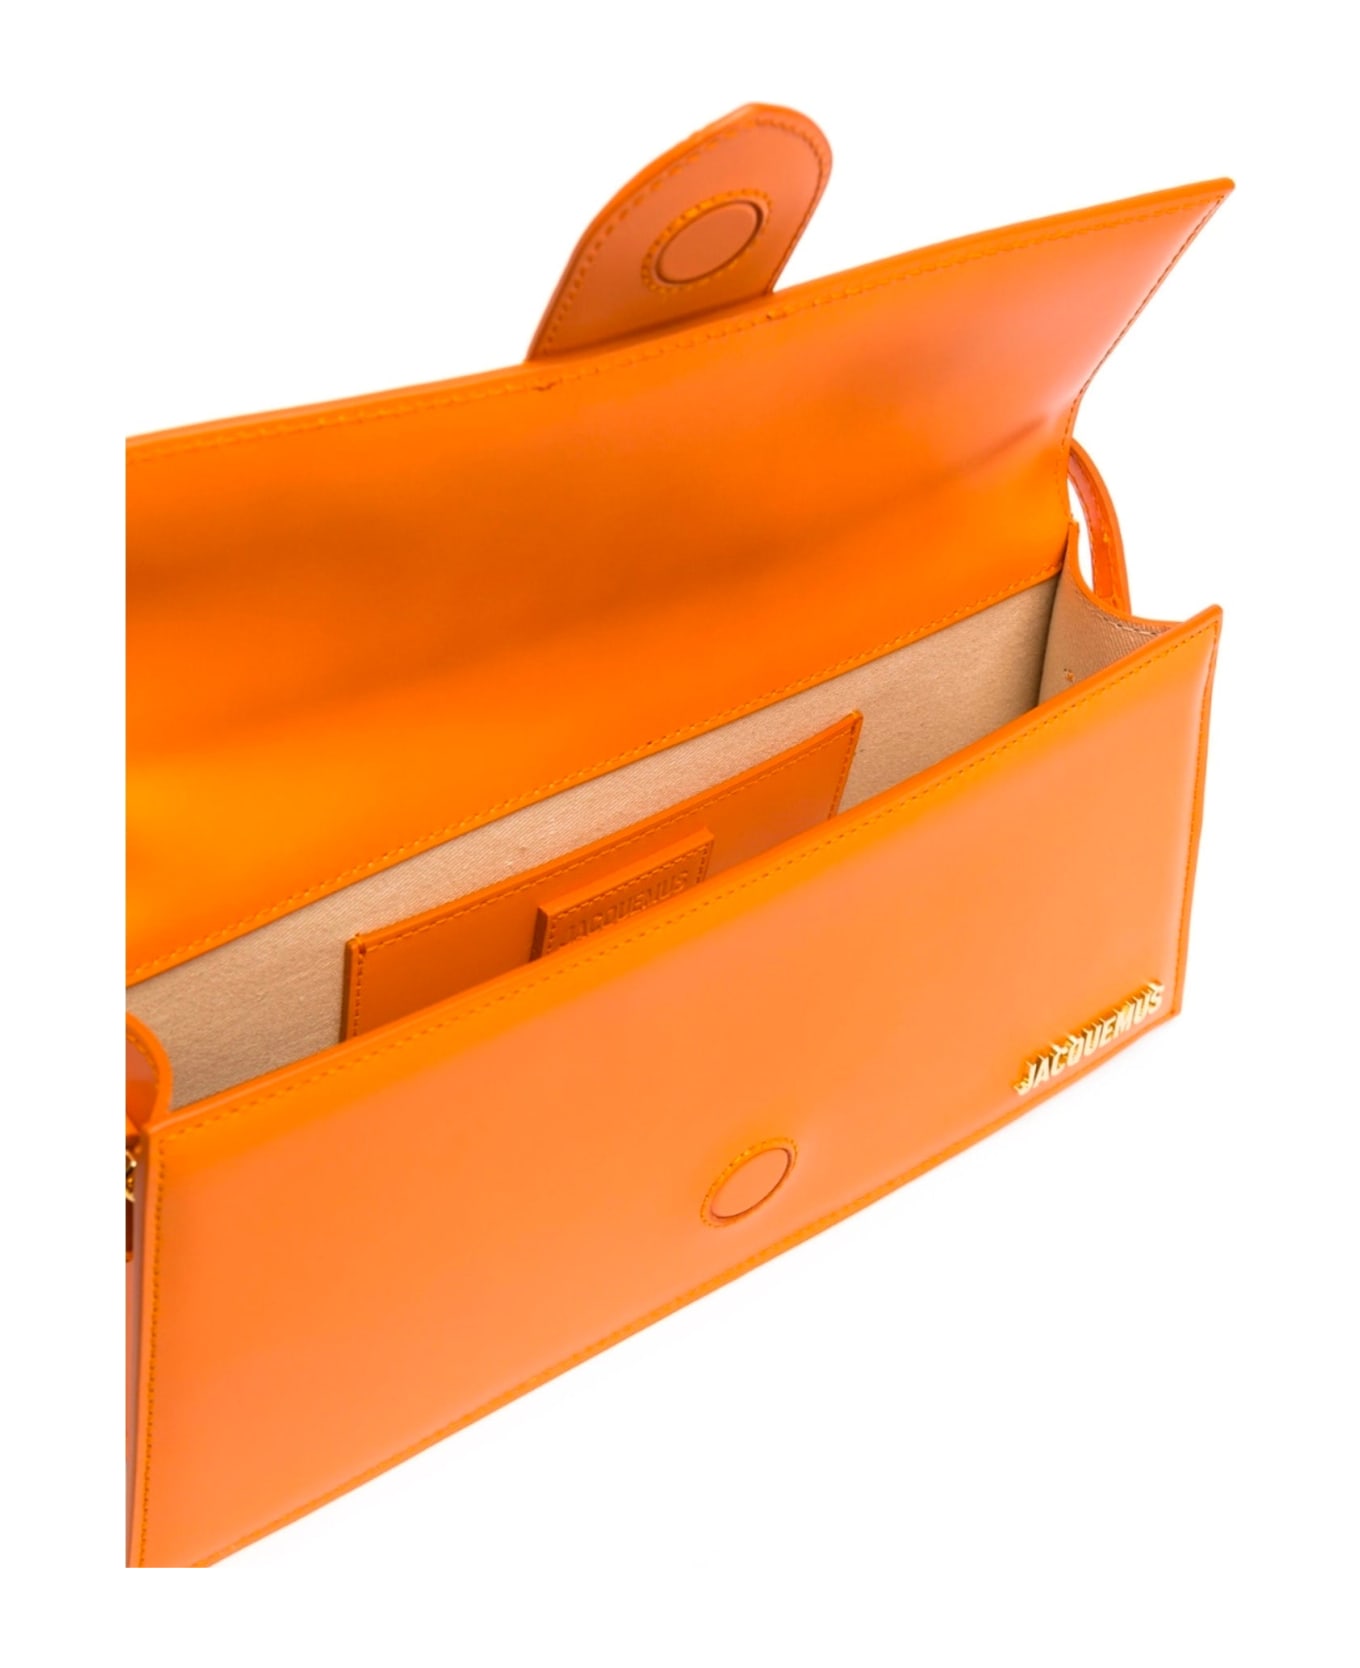 Jacquemus Le Bambino Long Bag - Orange トートバッグ